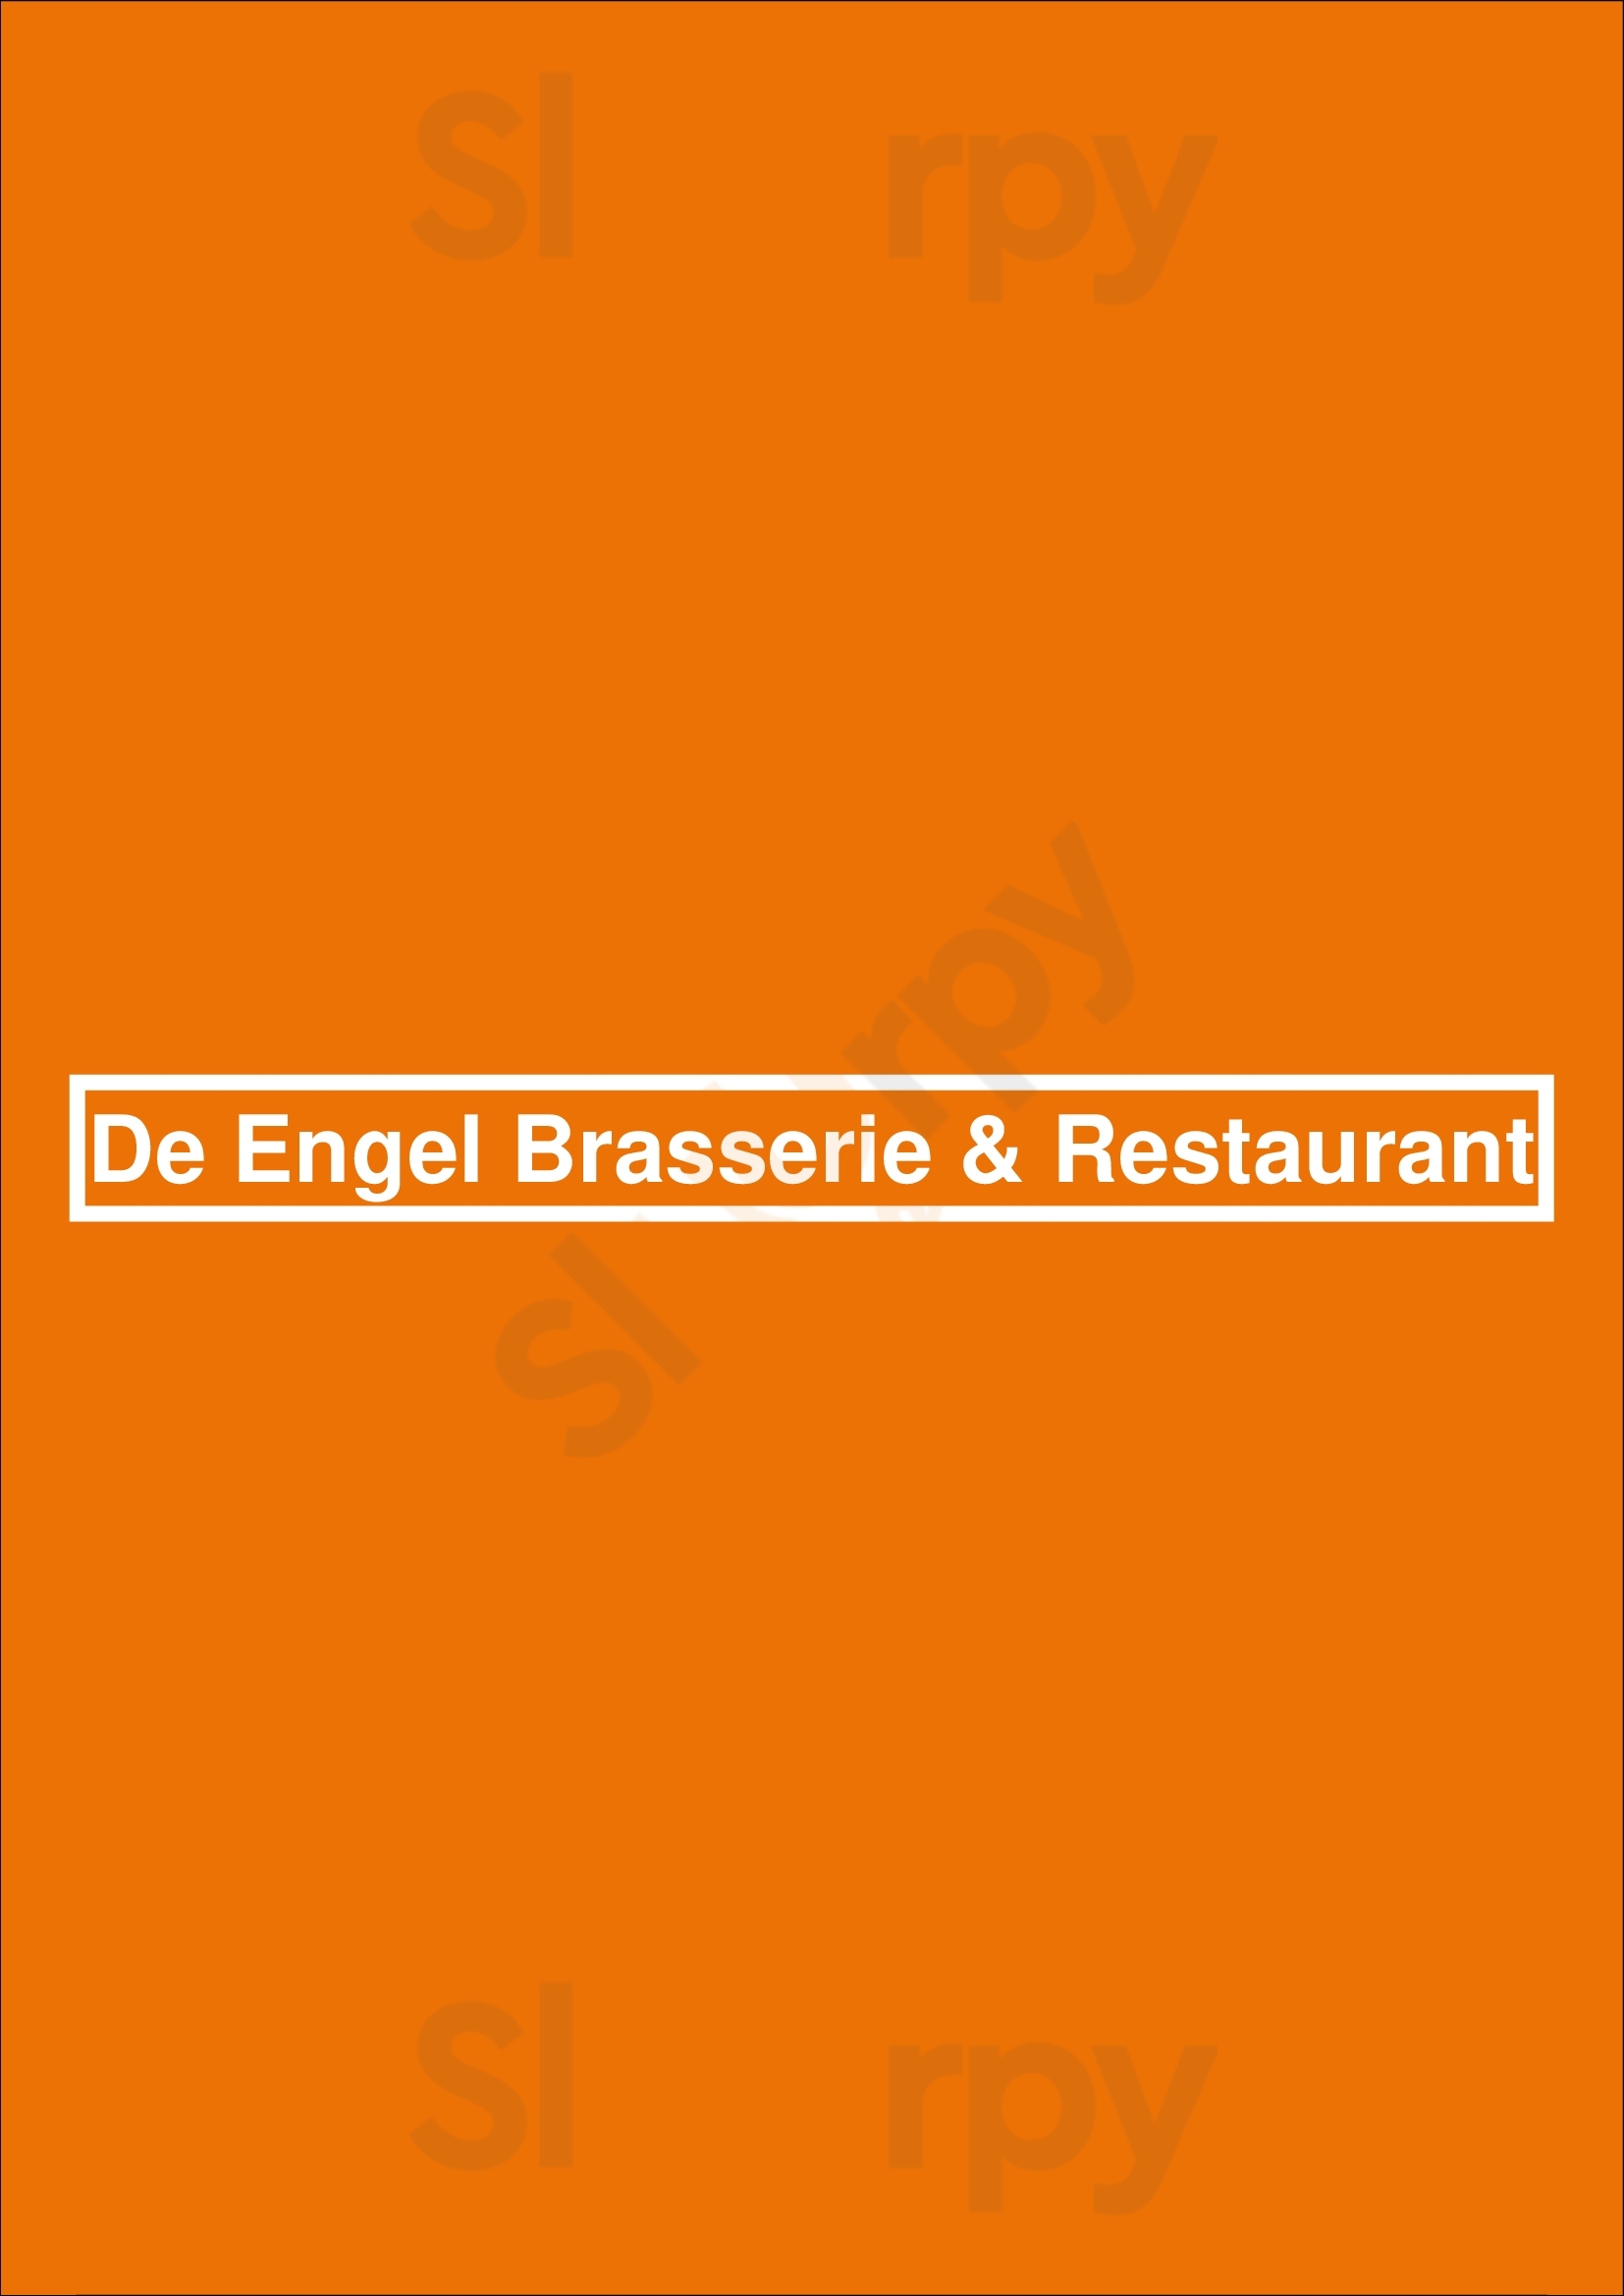 De Engel Brasserie & Restaurant Rotterdam Menu - 1